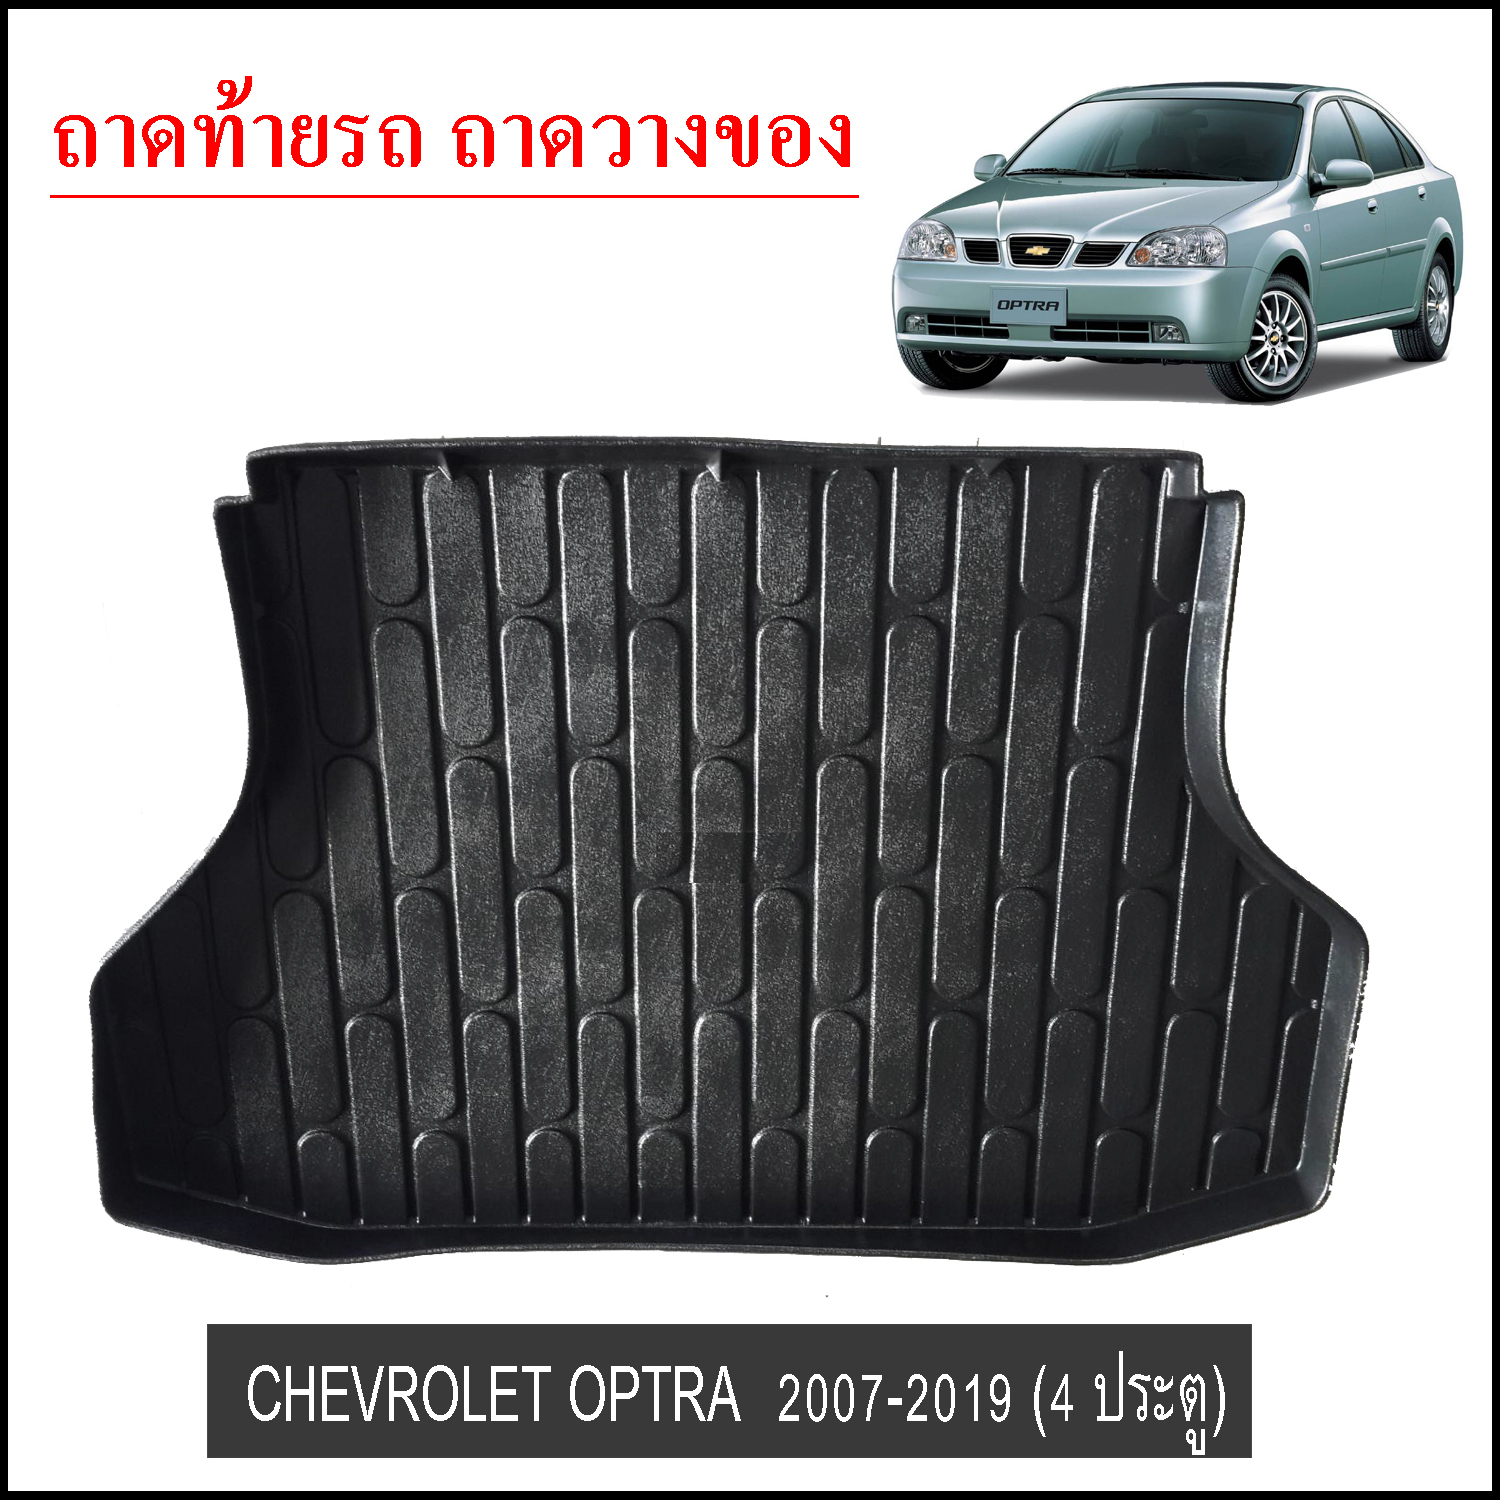 Chevrolet Optra 2007-2019